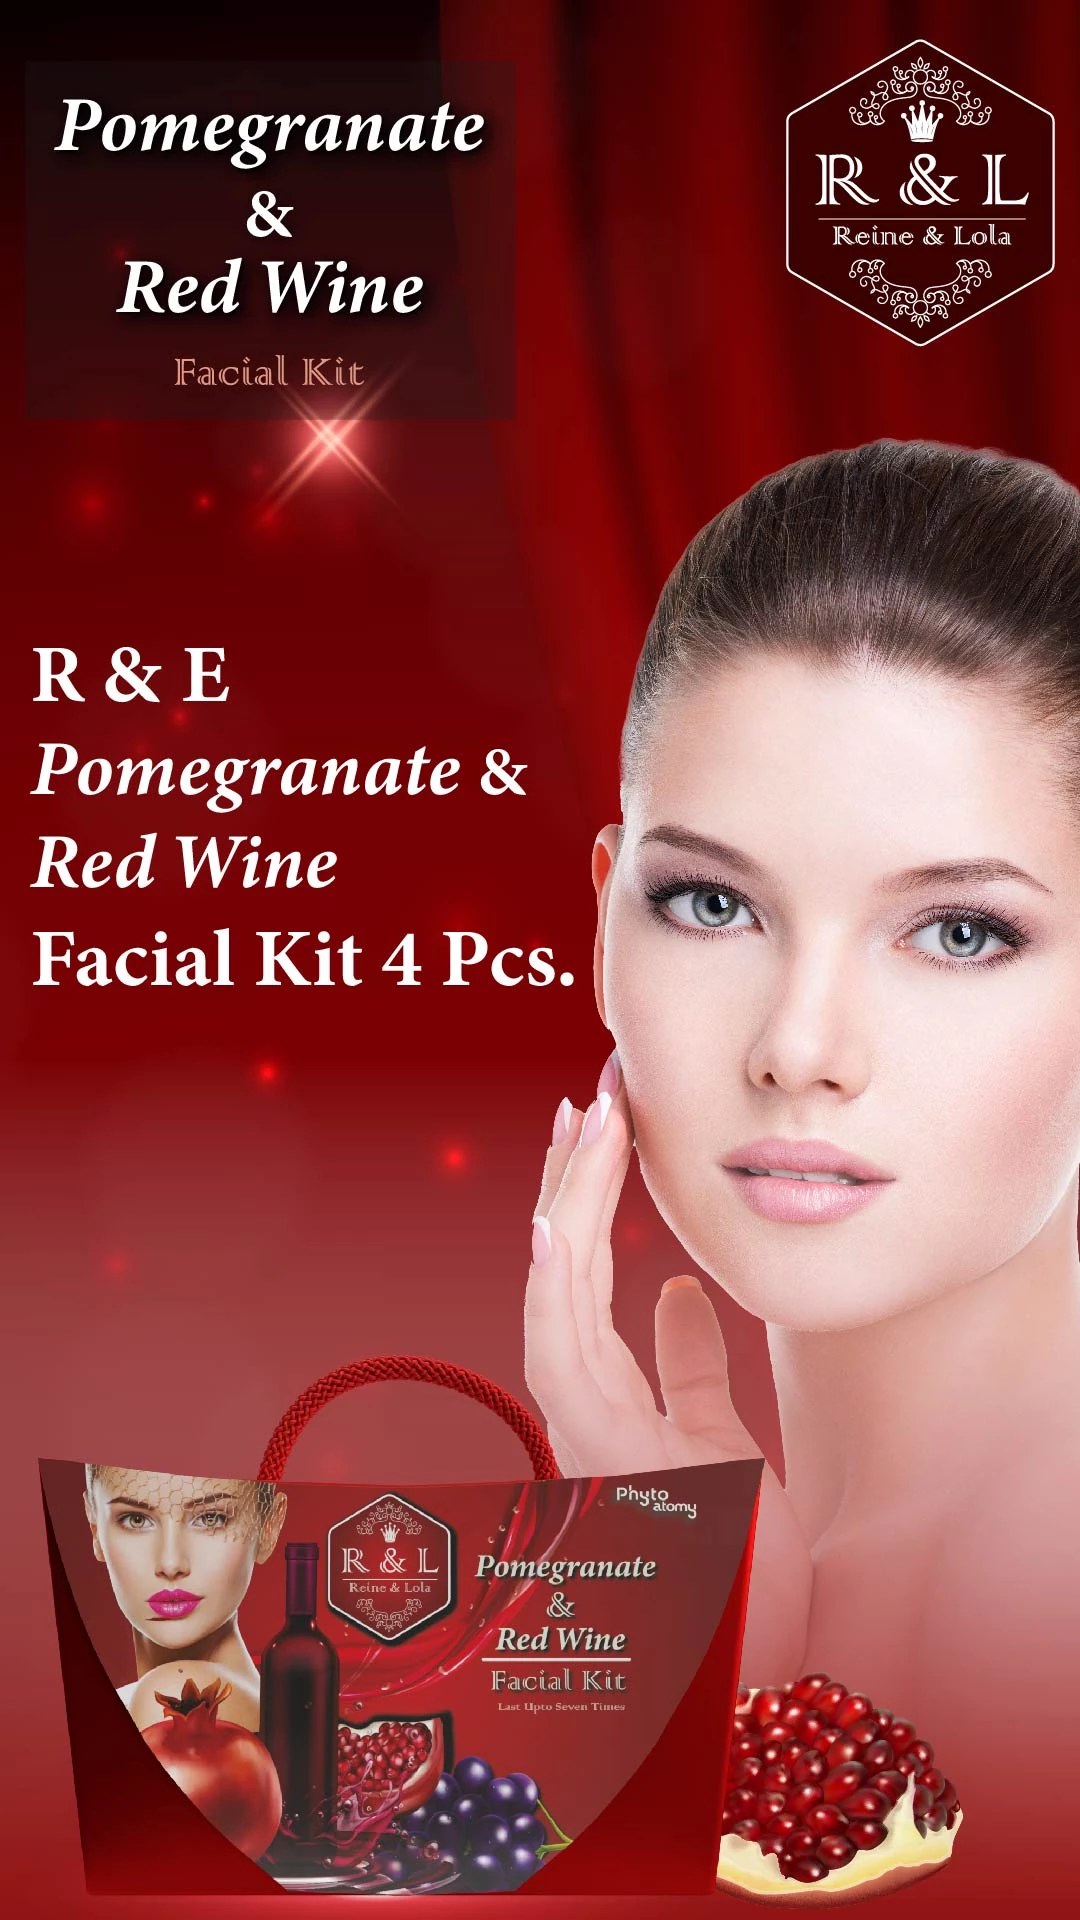 RBV B2B R & L Pomegranate & Red Wine Facial Kit 4 Pcs.